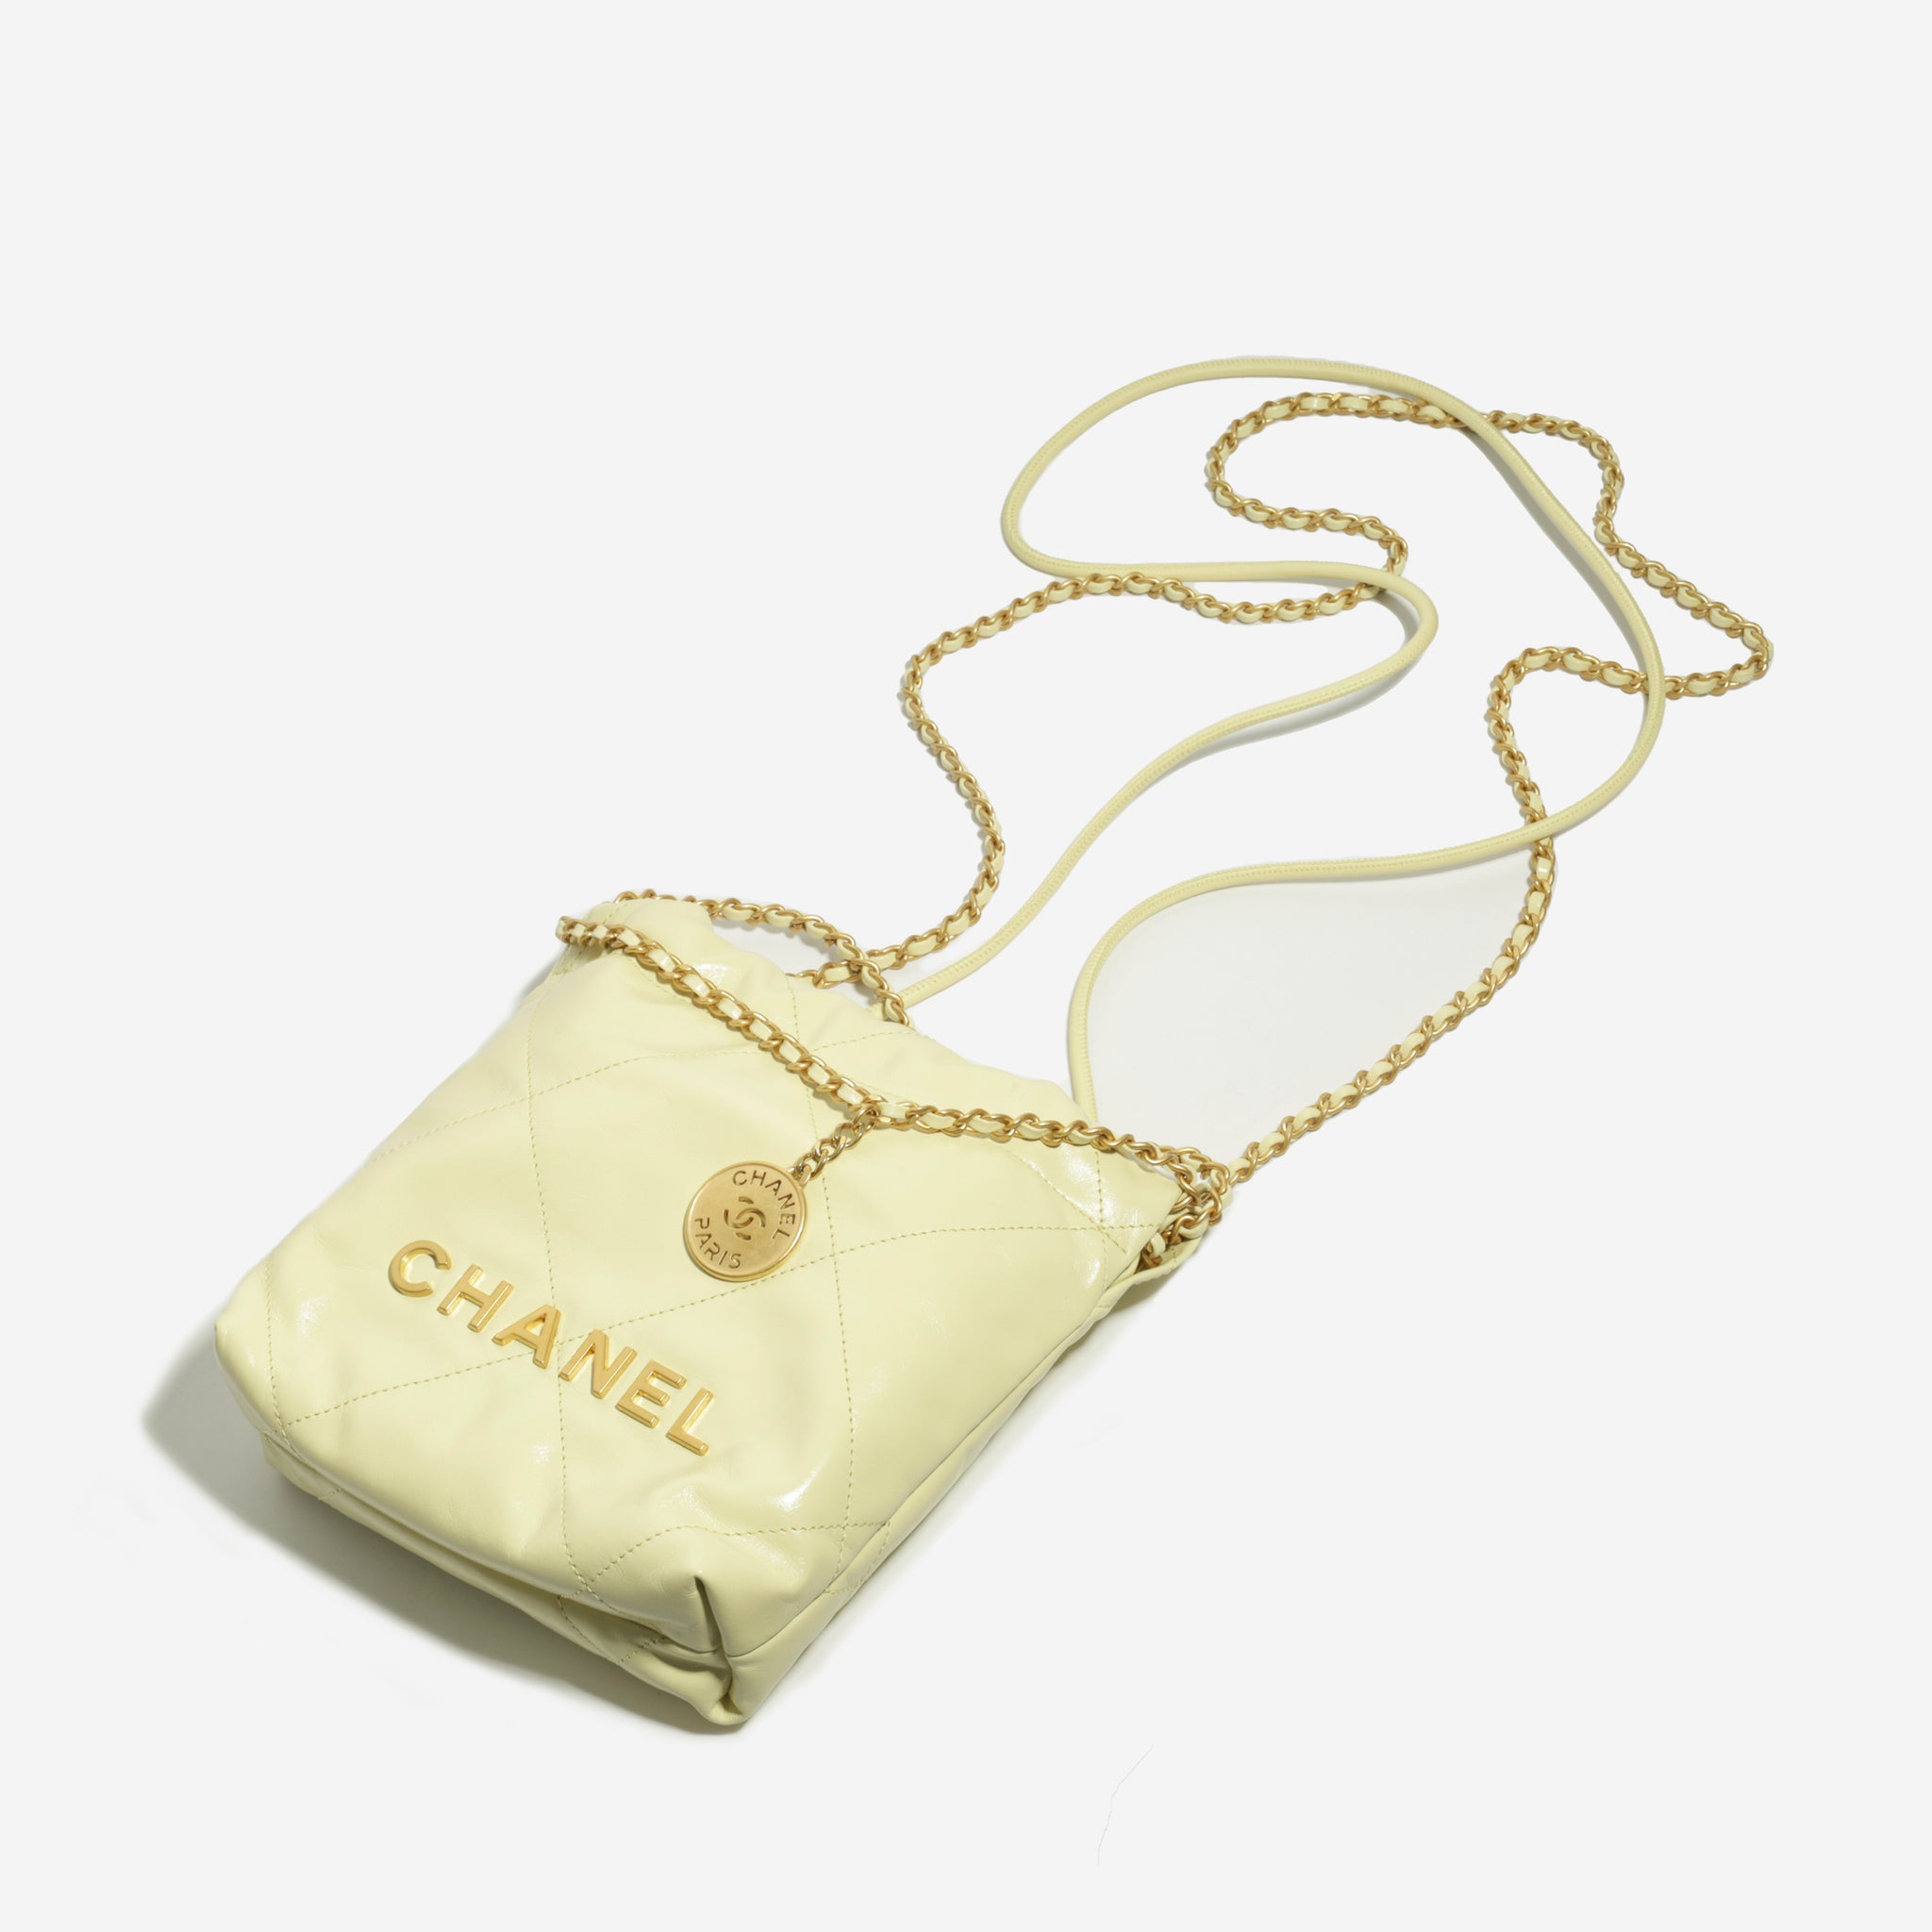 Chanel - 22 Mini Handbag - Light Yellow Shiny Crumpled Calfskin